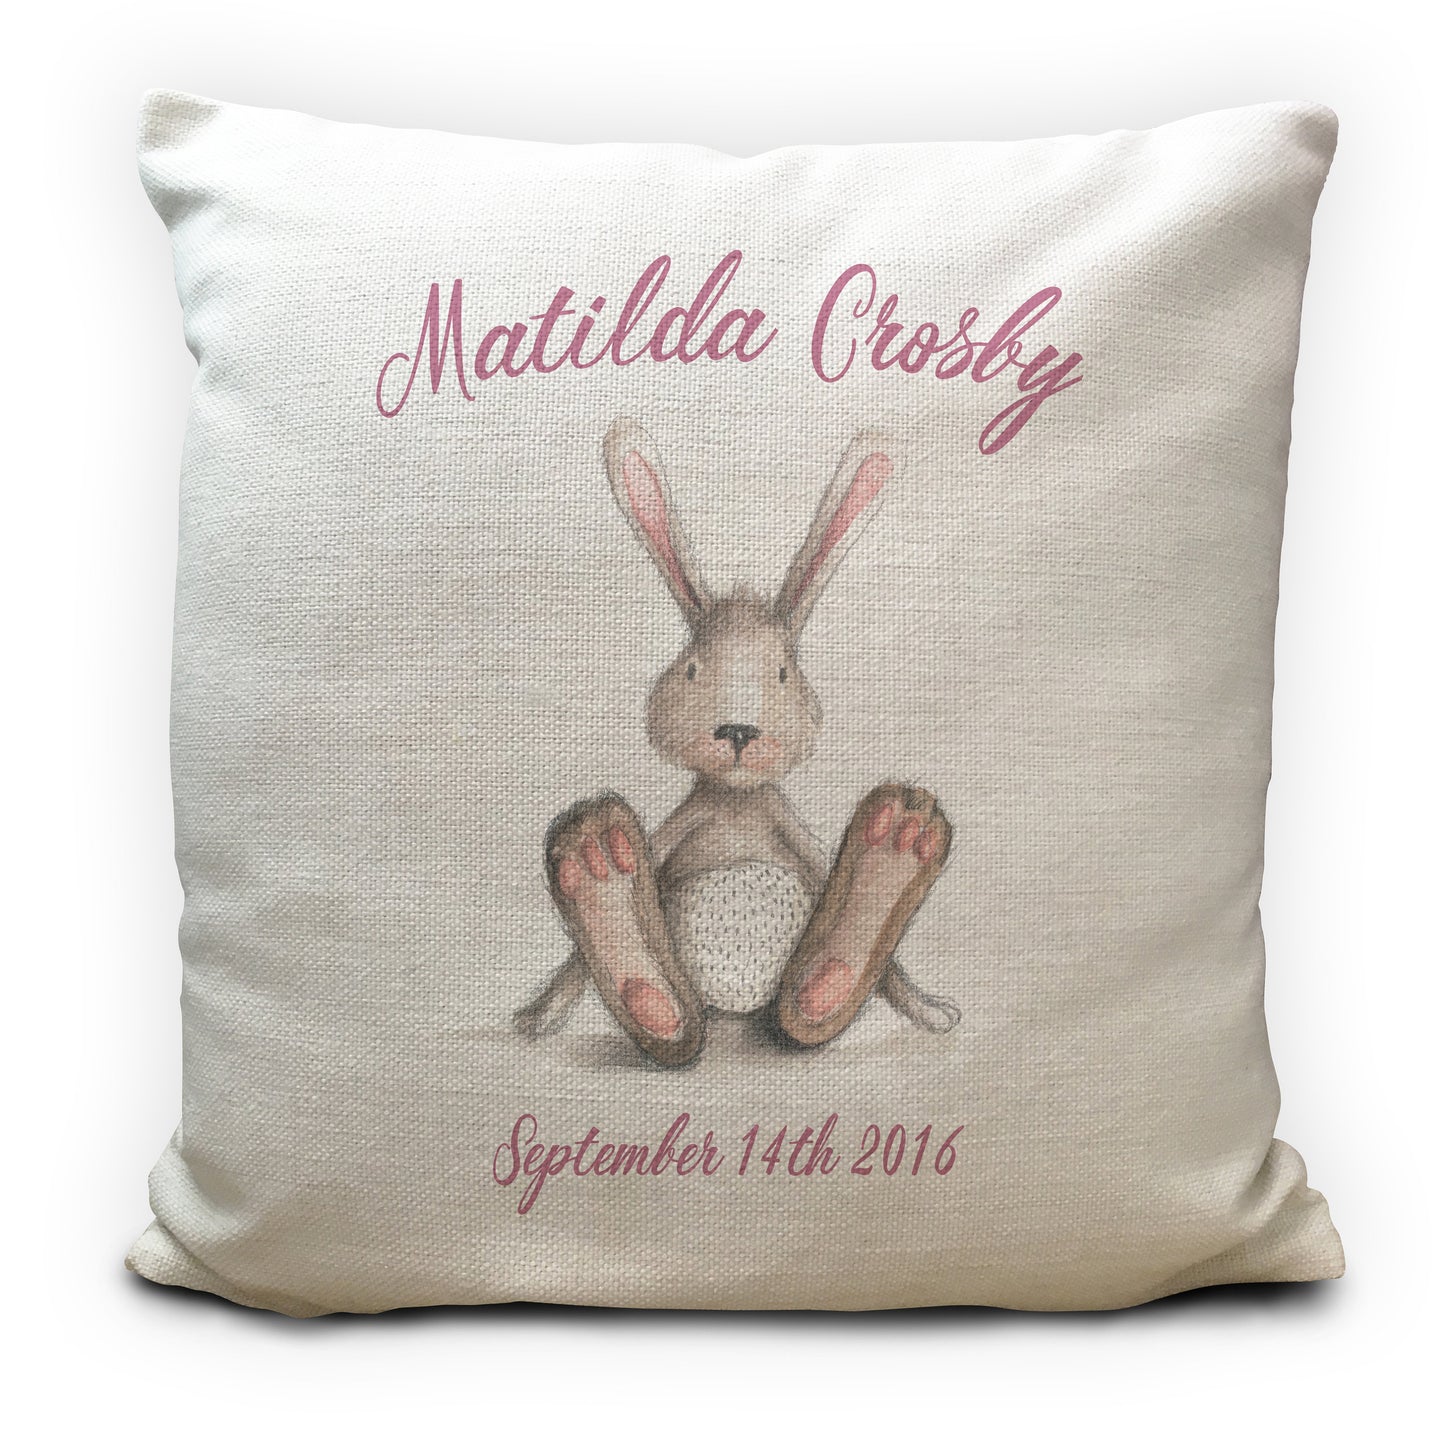 Personalised new baby christening birthday cushion cover gift bunny rabbit design